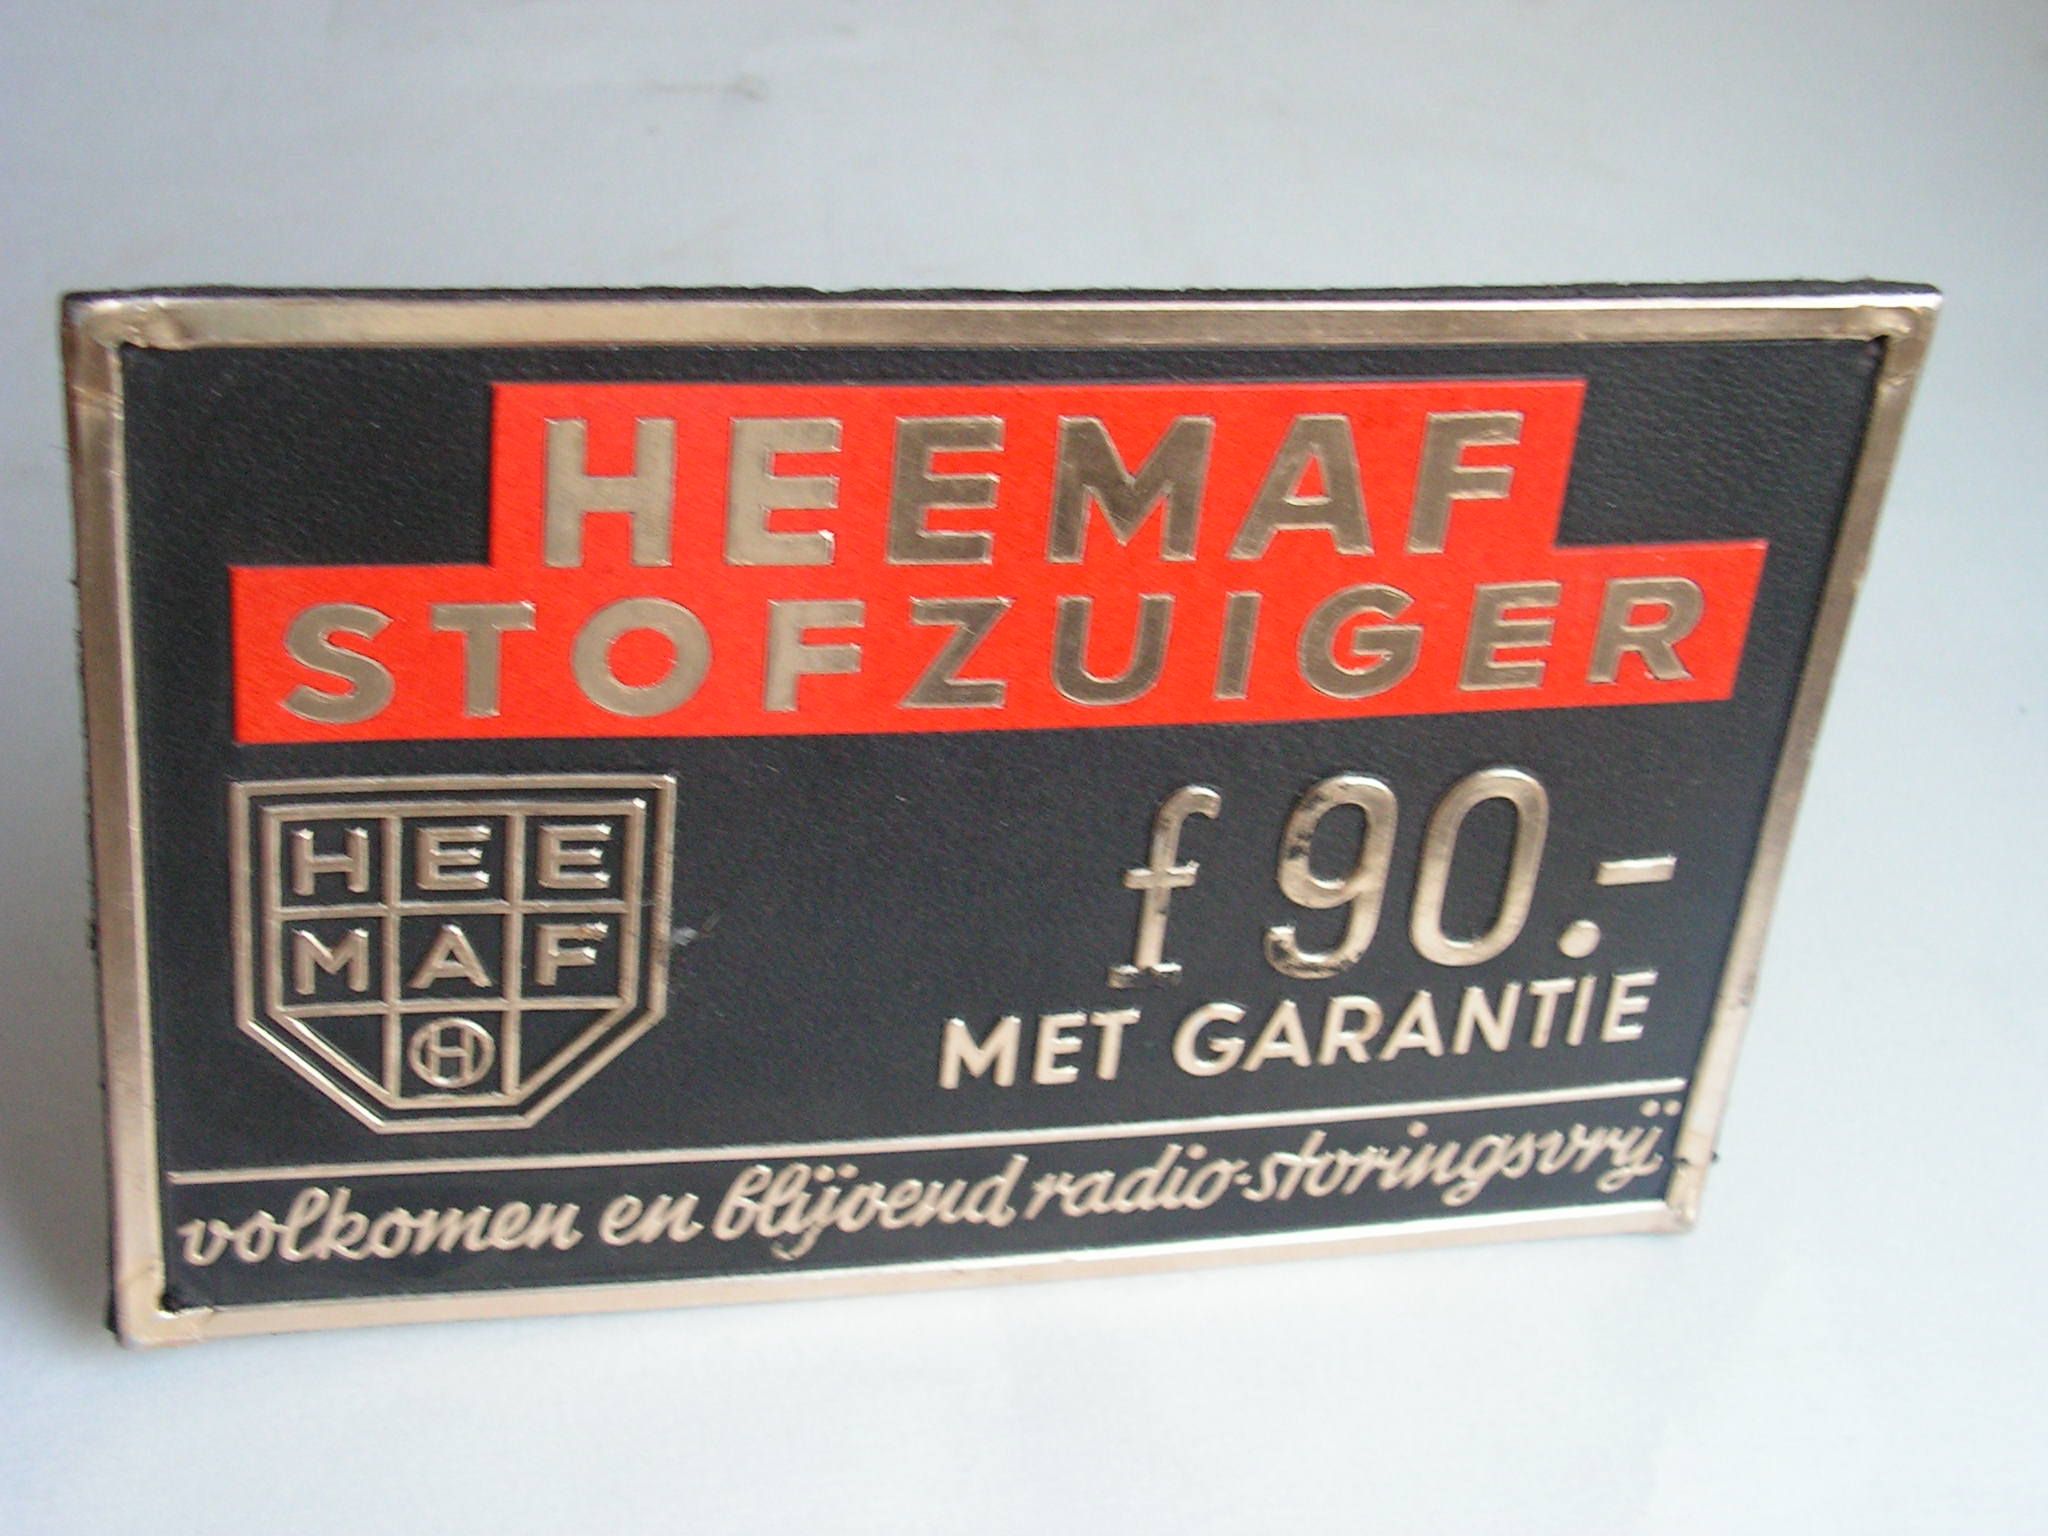 Reclame stofzuigers Heemaf 1941